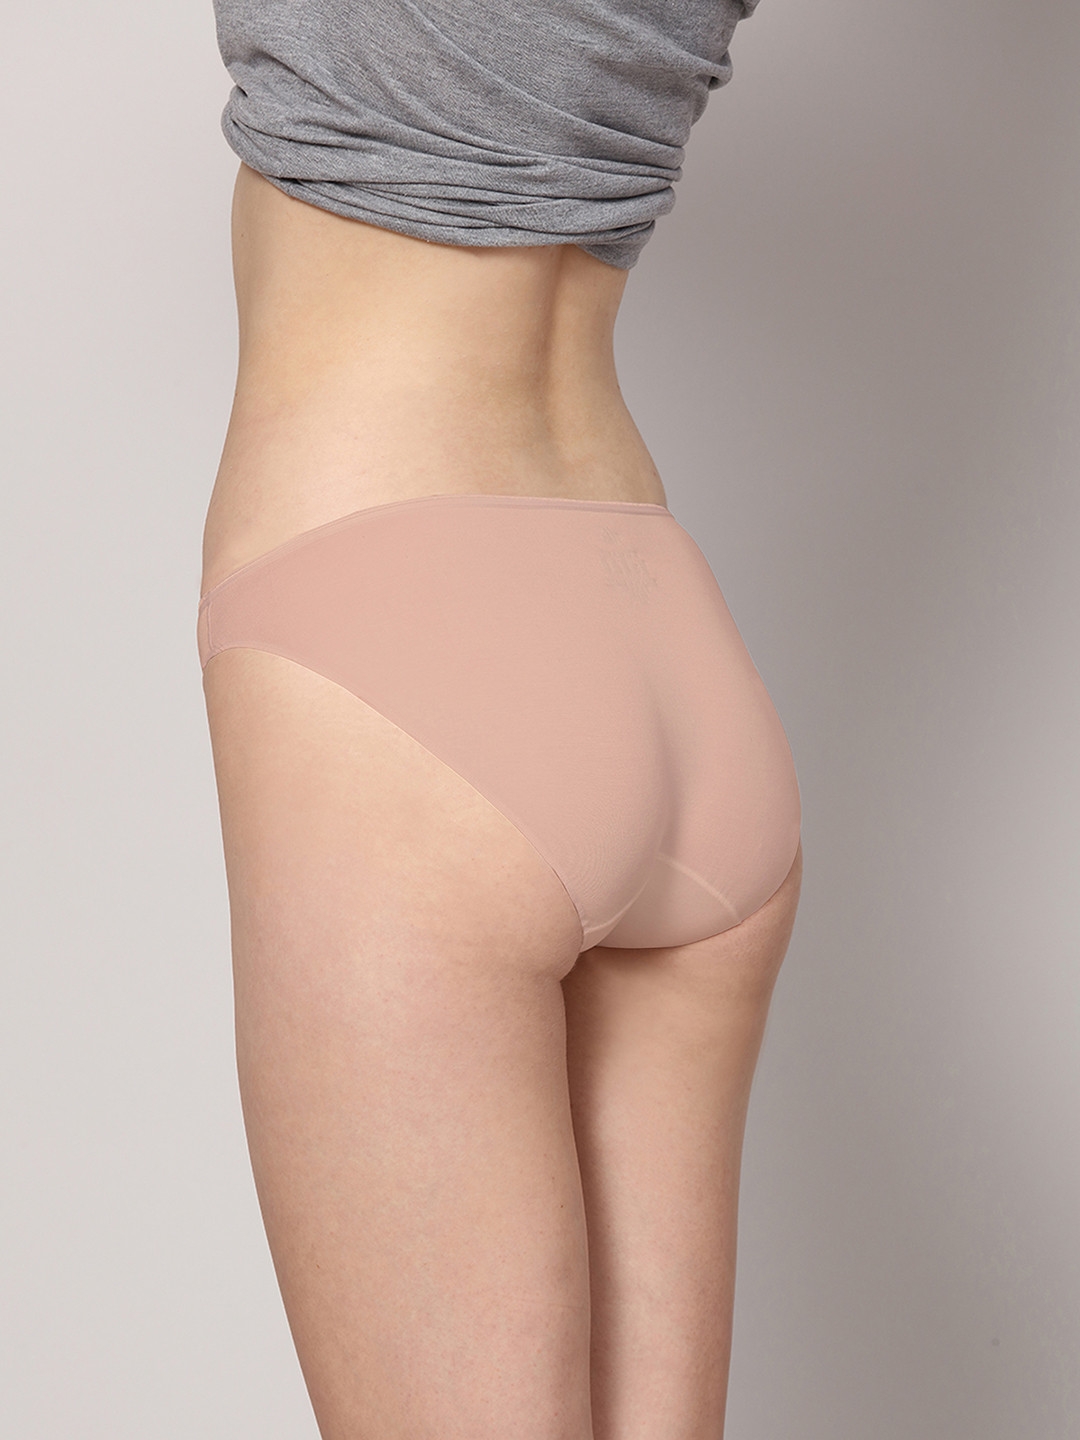 AshleyandAlvis | AshleyandAlvis Women's Panties Micro Modal, Anti Bacterial, Skinny Soft, Premium Bikini-No Itching, Sweat Proof, Double In-seam Gusset 3